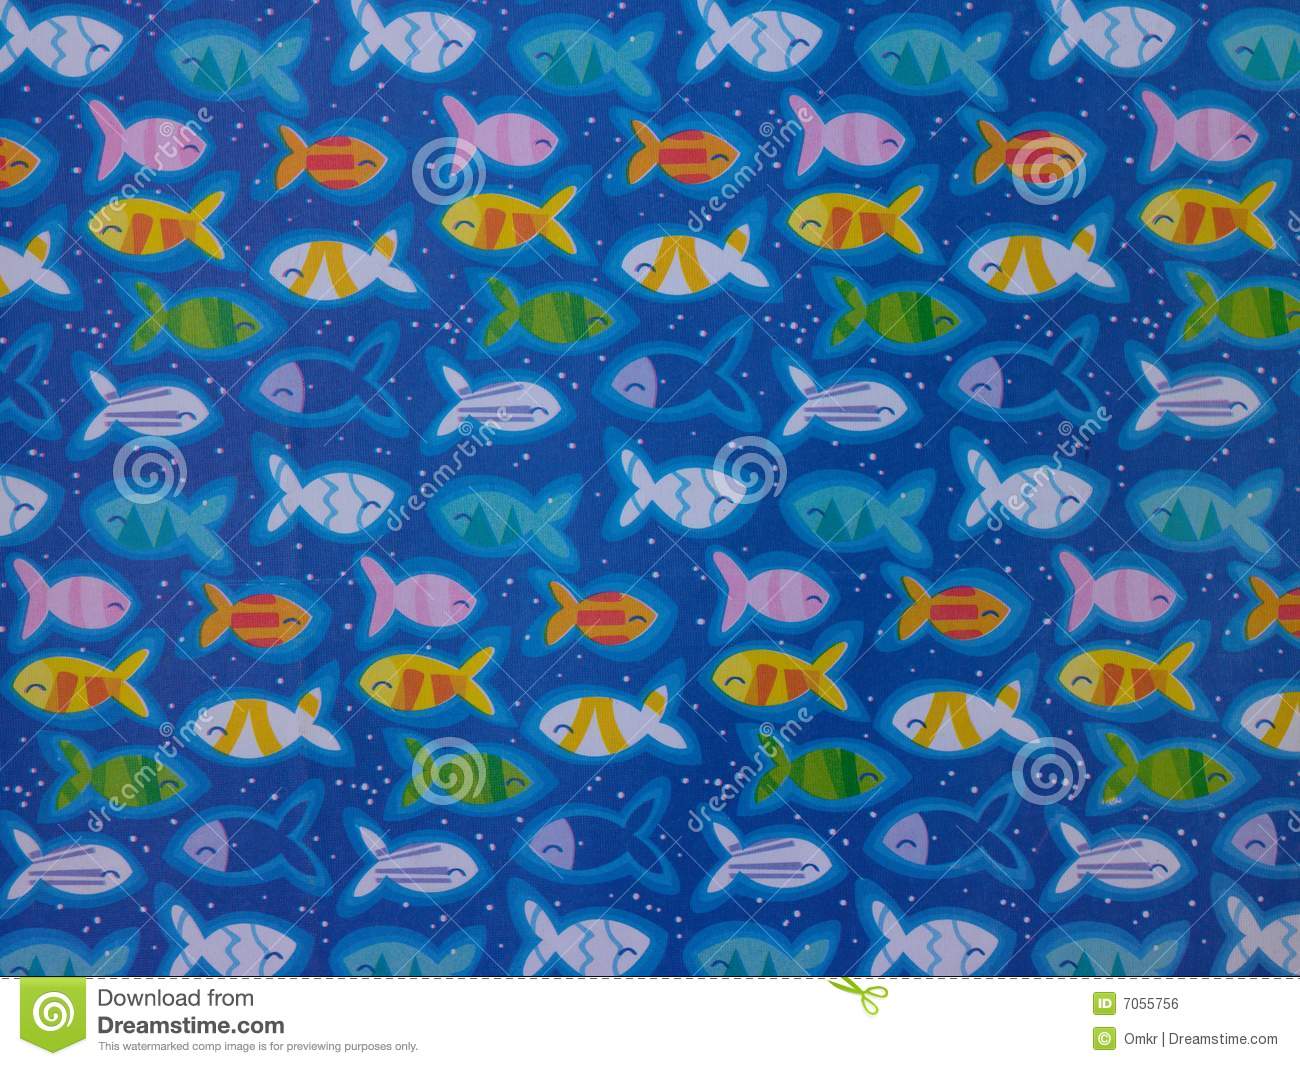 Fish background clipart - ClipartFest